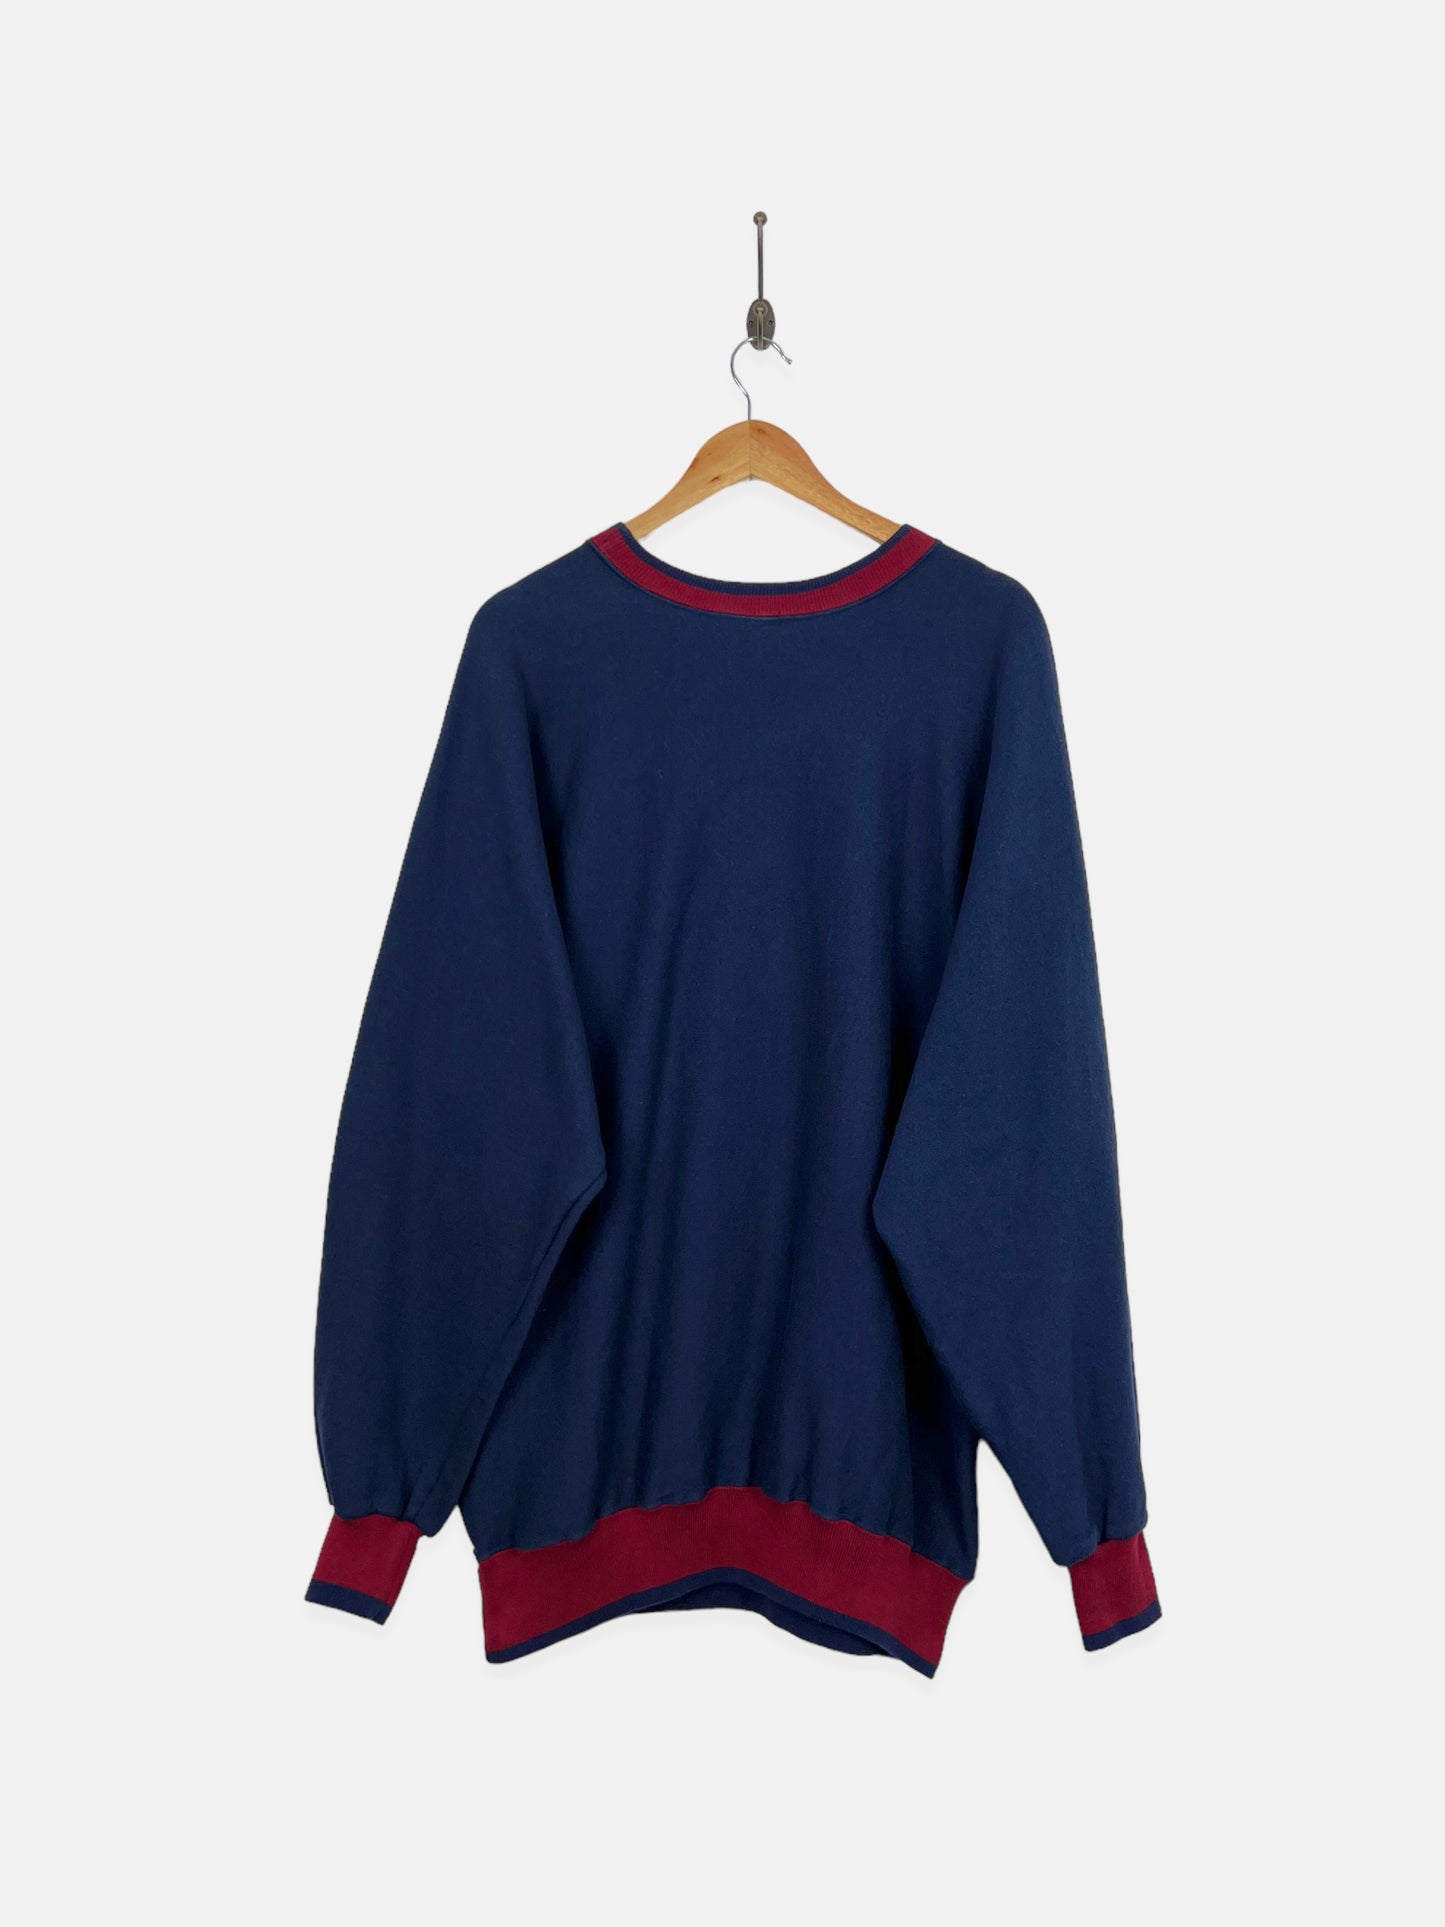 90's Nantucket USA Made Embroidered Vintage Sweatshirt Size XL